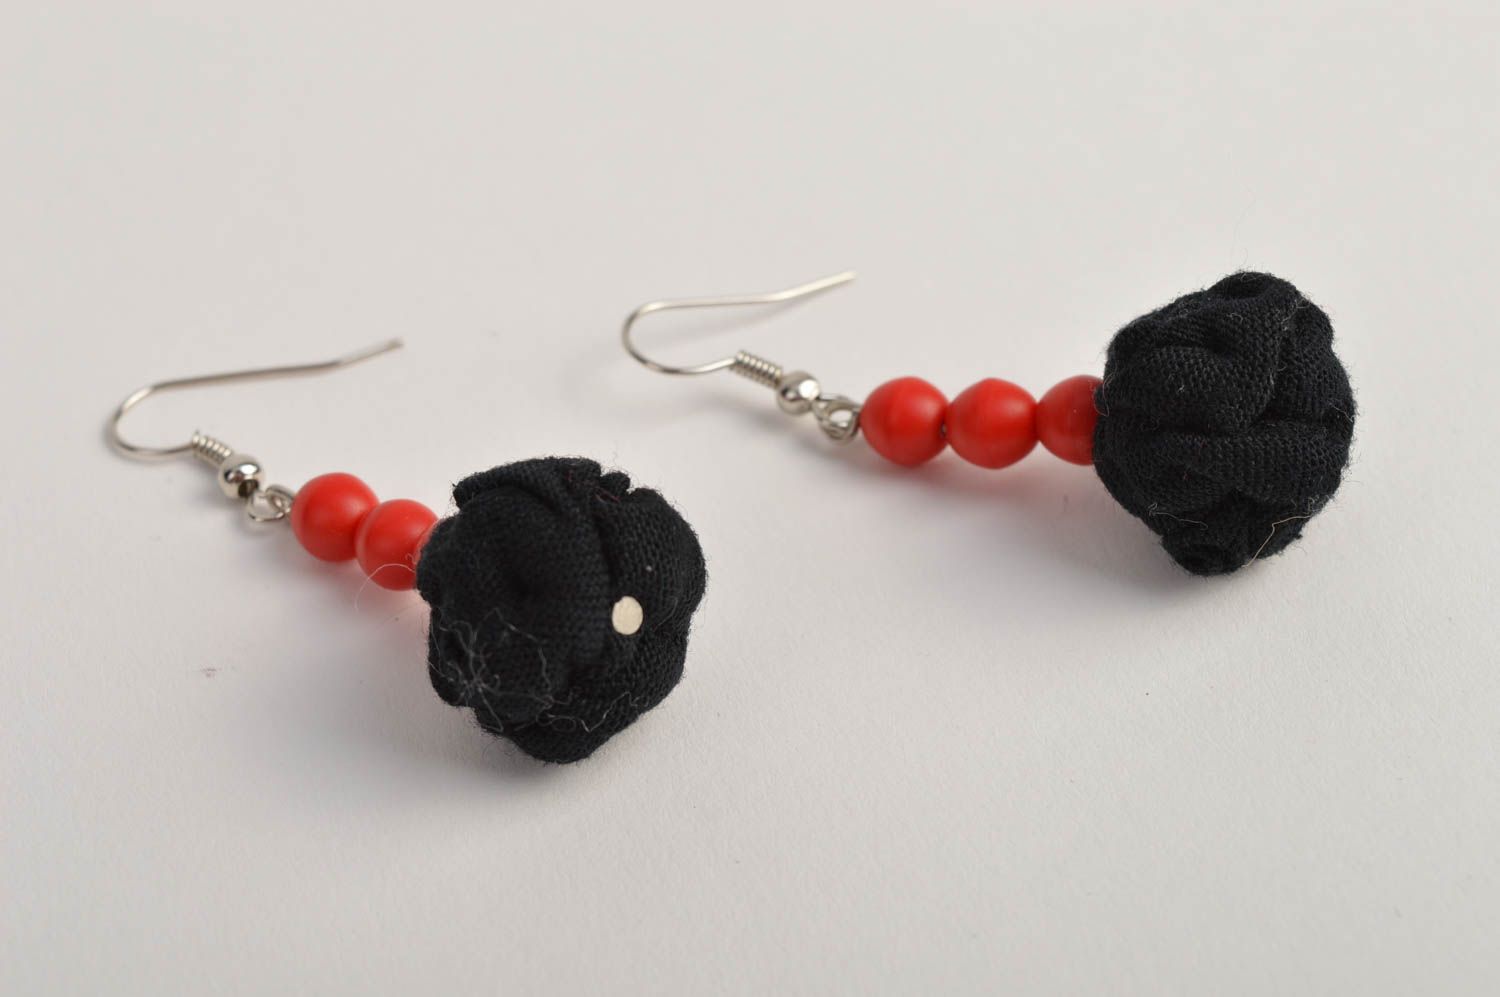 Handmade stylish earrings textile black earrings elegant evening jewelry photo 2